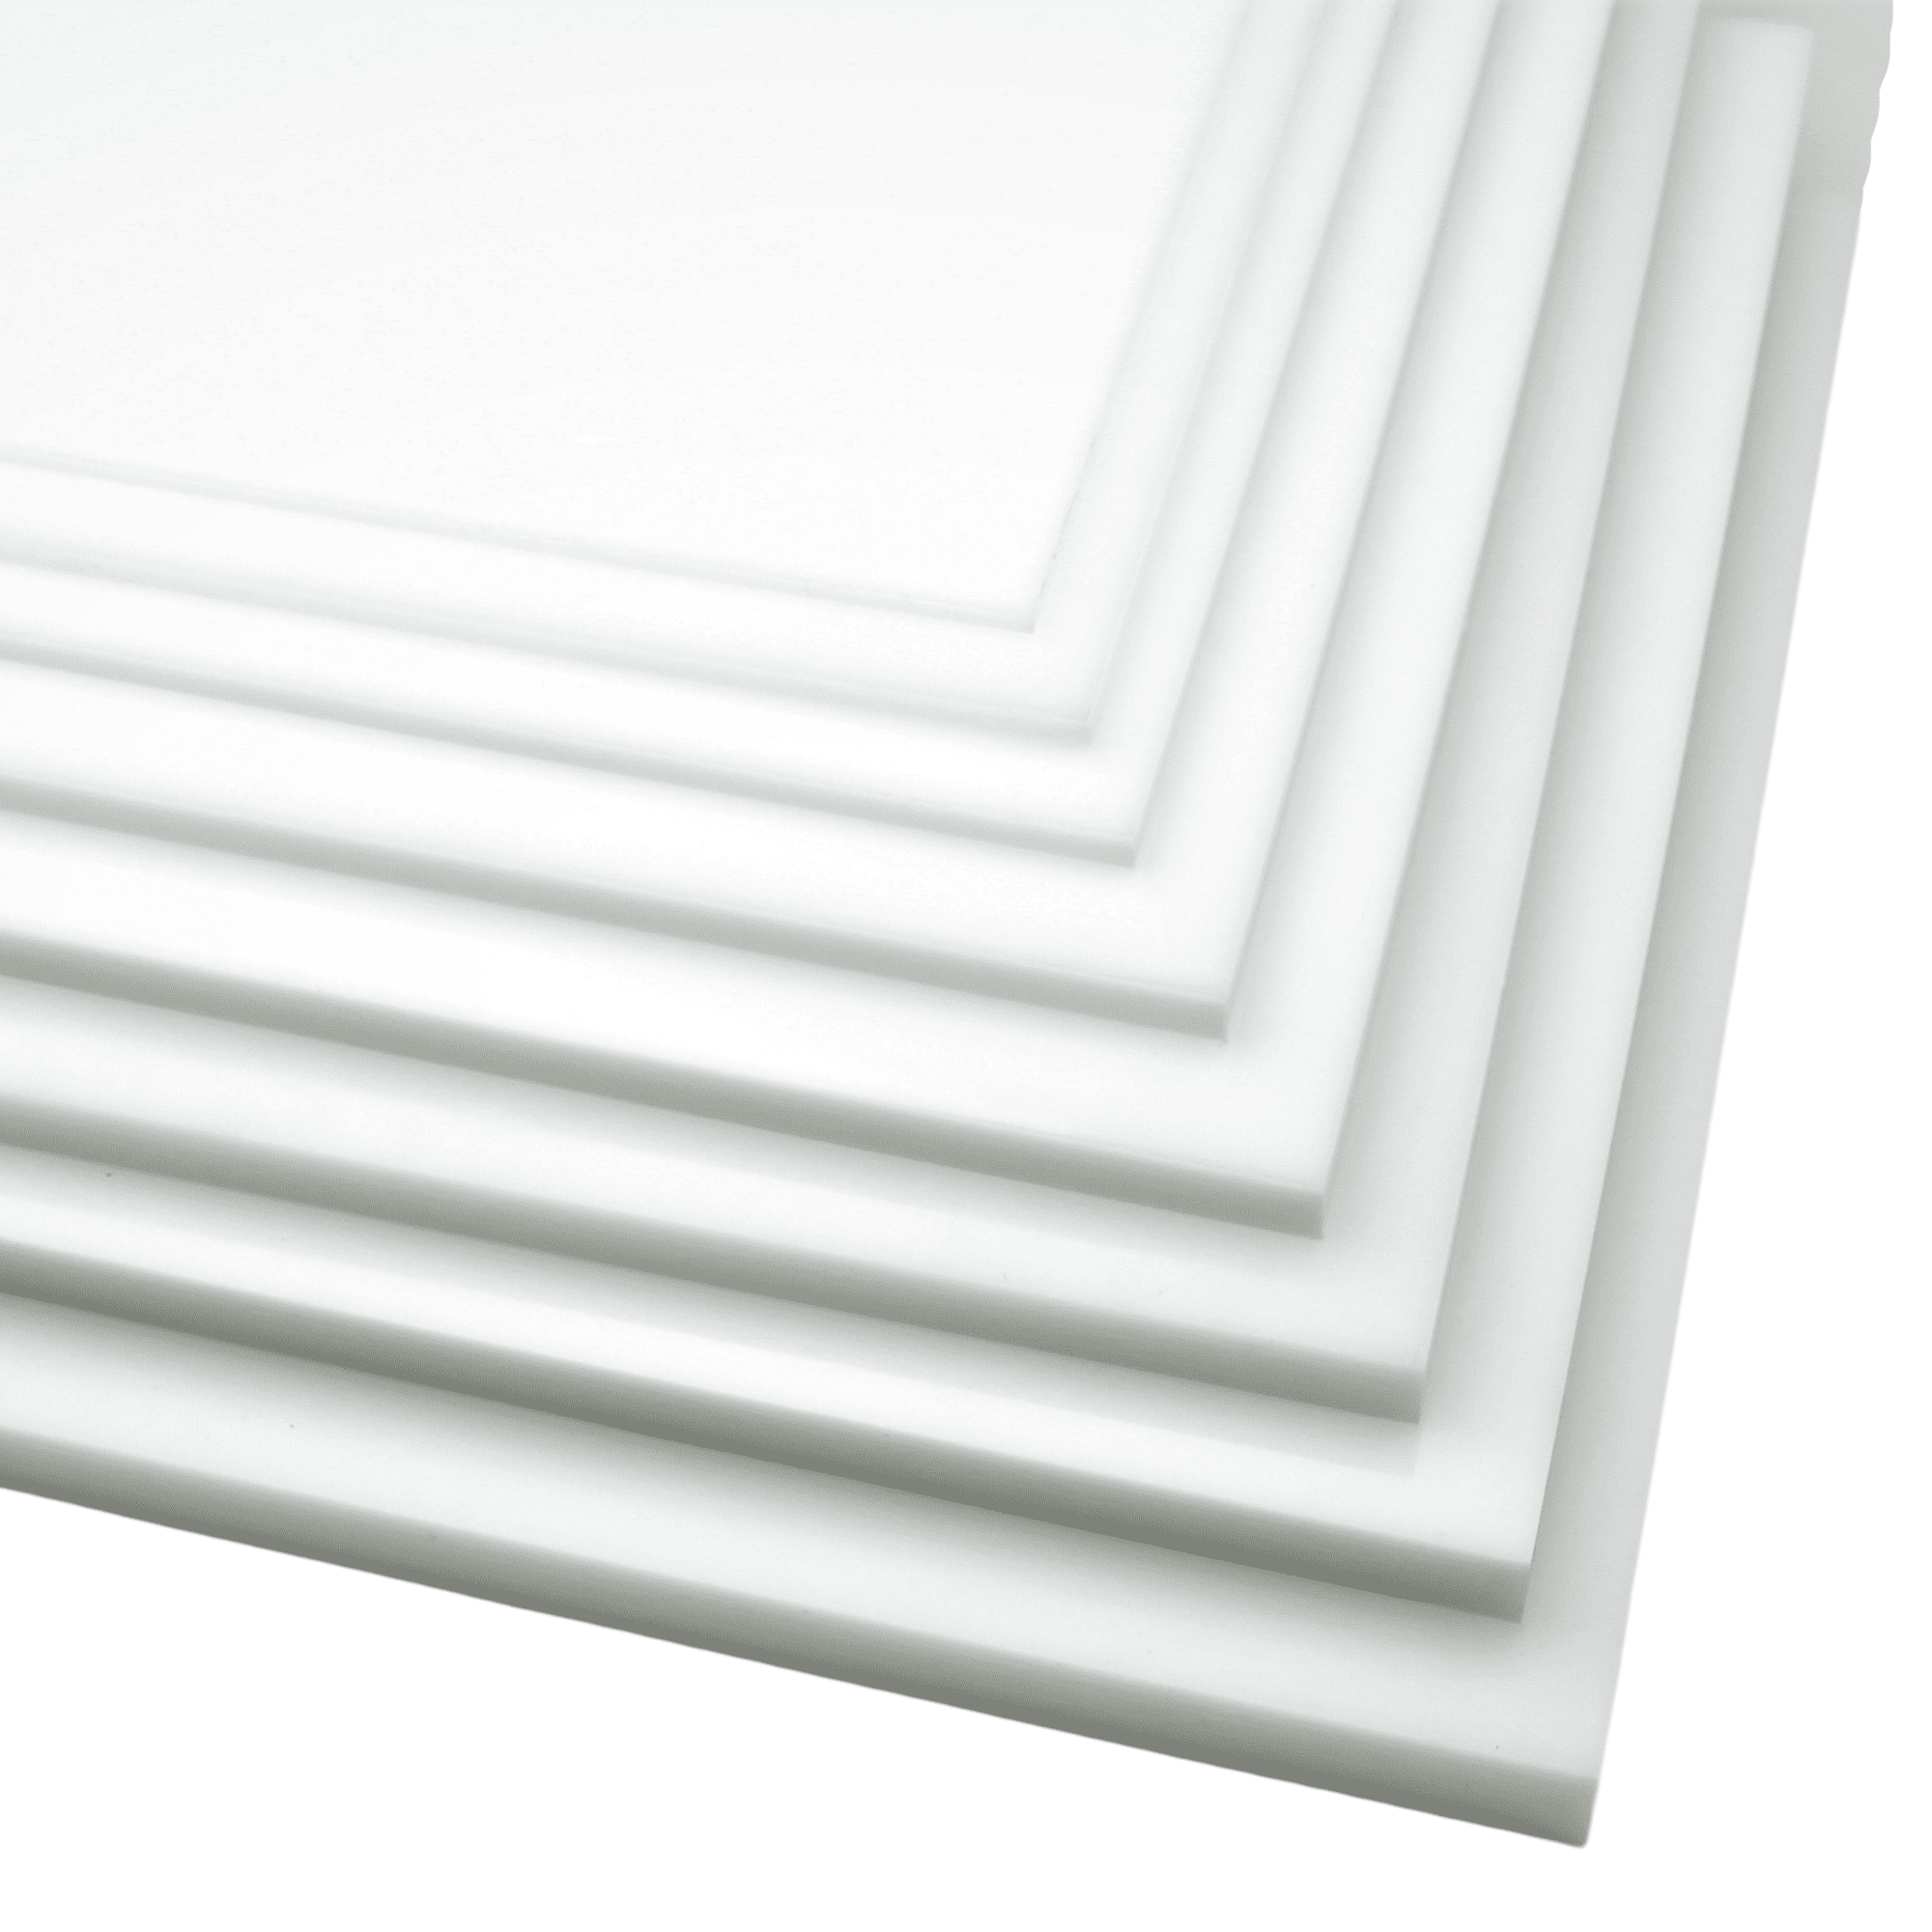 Plastic Sheet 1/2" x 12" x 24" Black HDPE High Density Polyethylene 